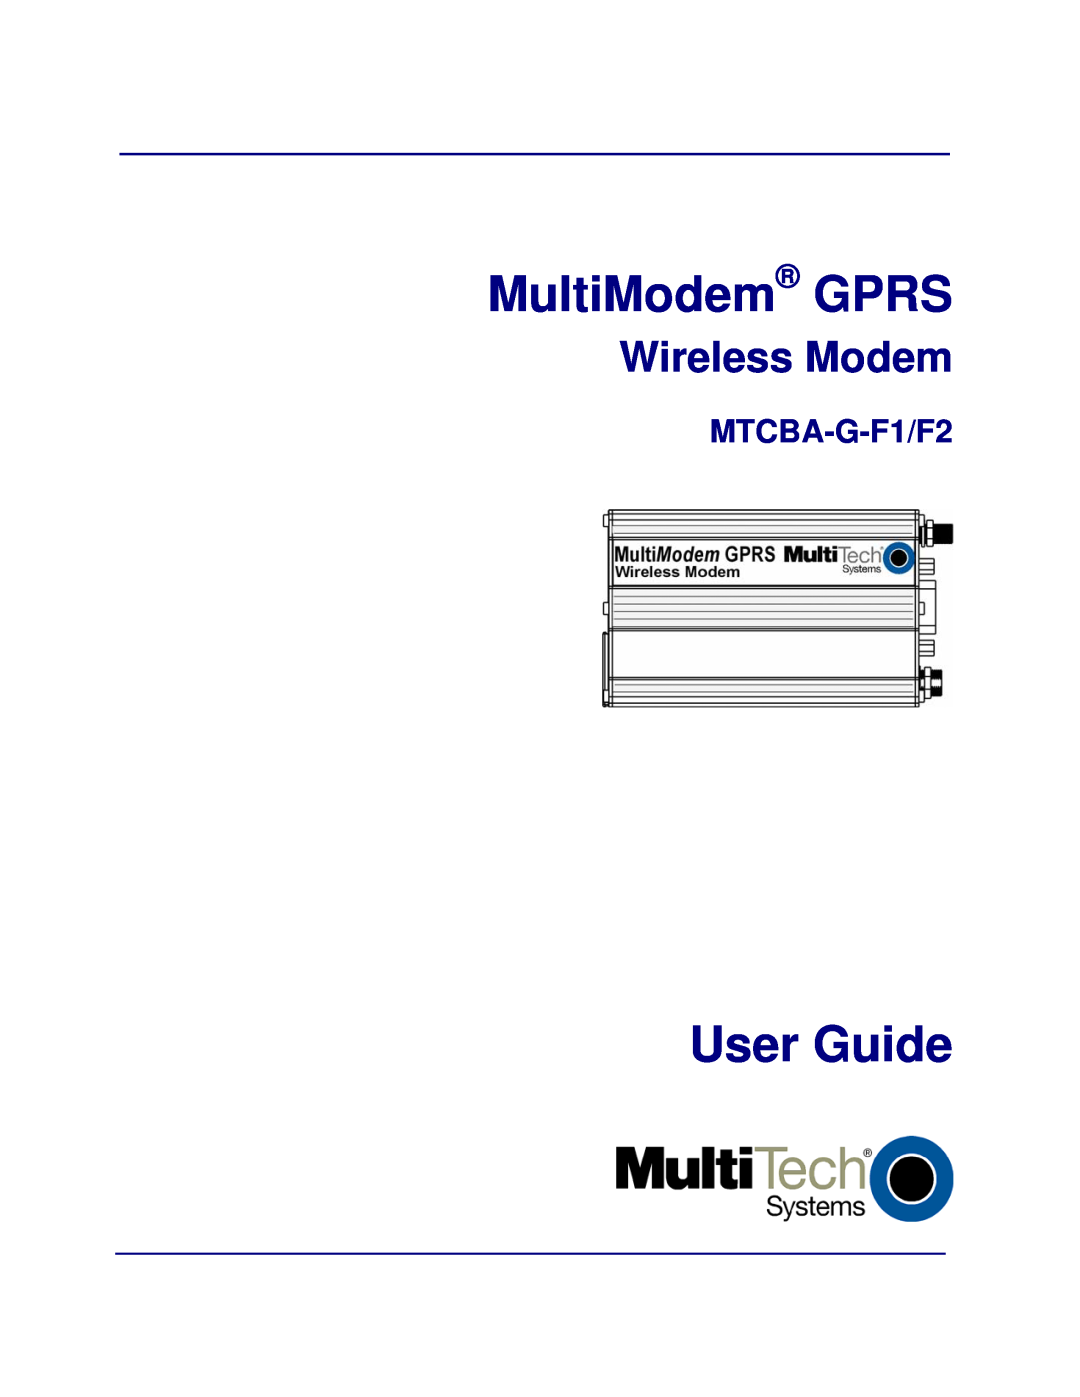 Multi-Tech Systems manual MultiModem GPRS, User Guide, Wireless Modem, MTCBA-G-F1/F2 